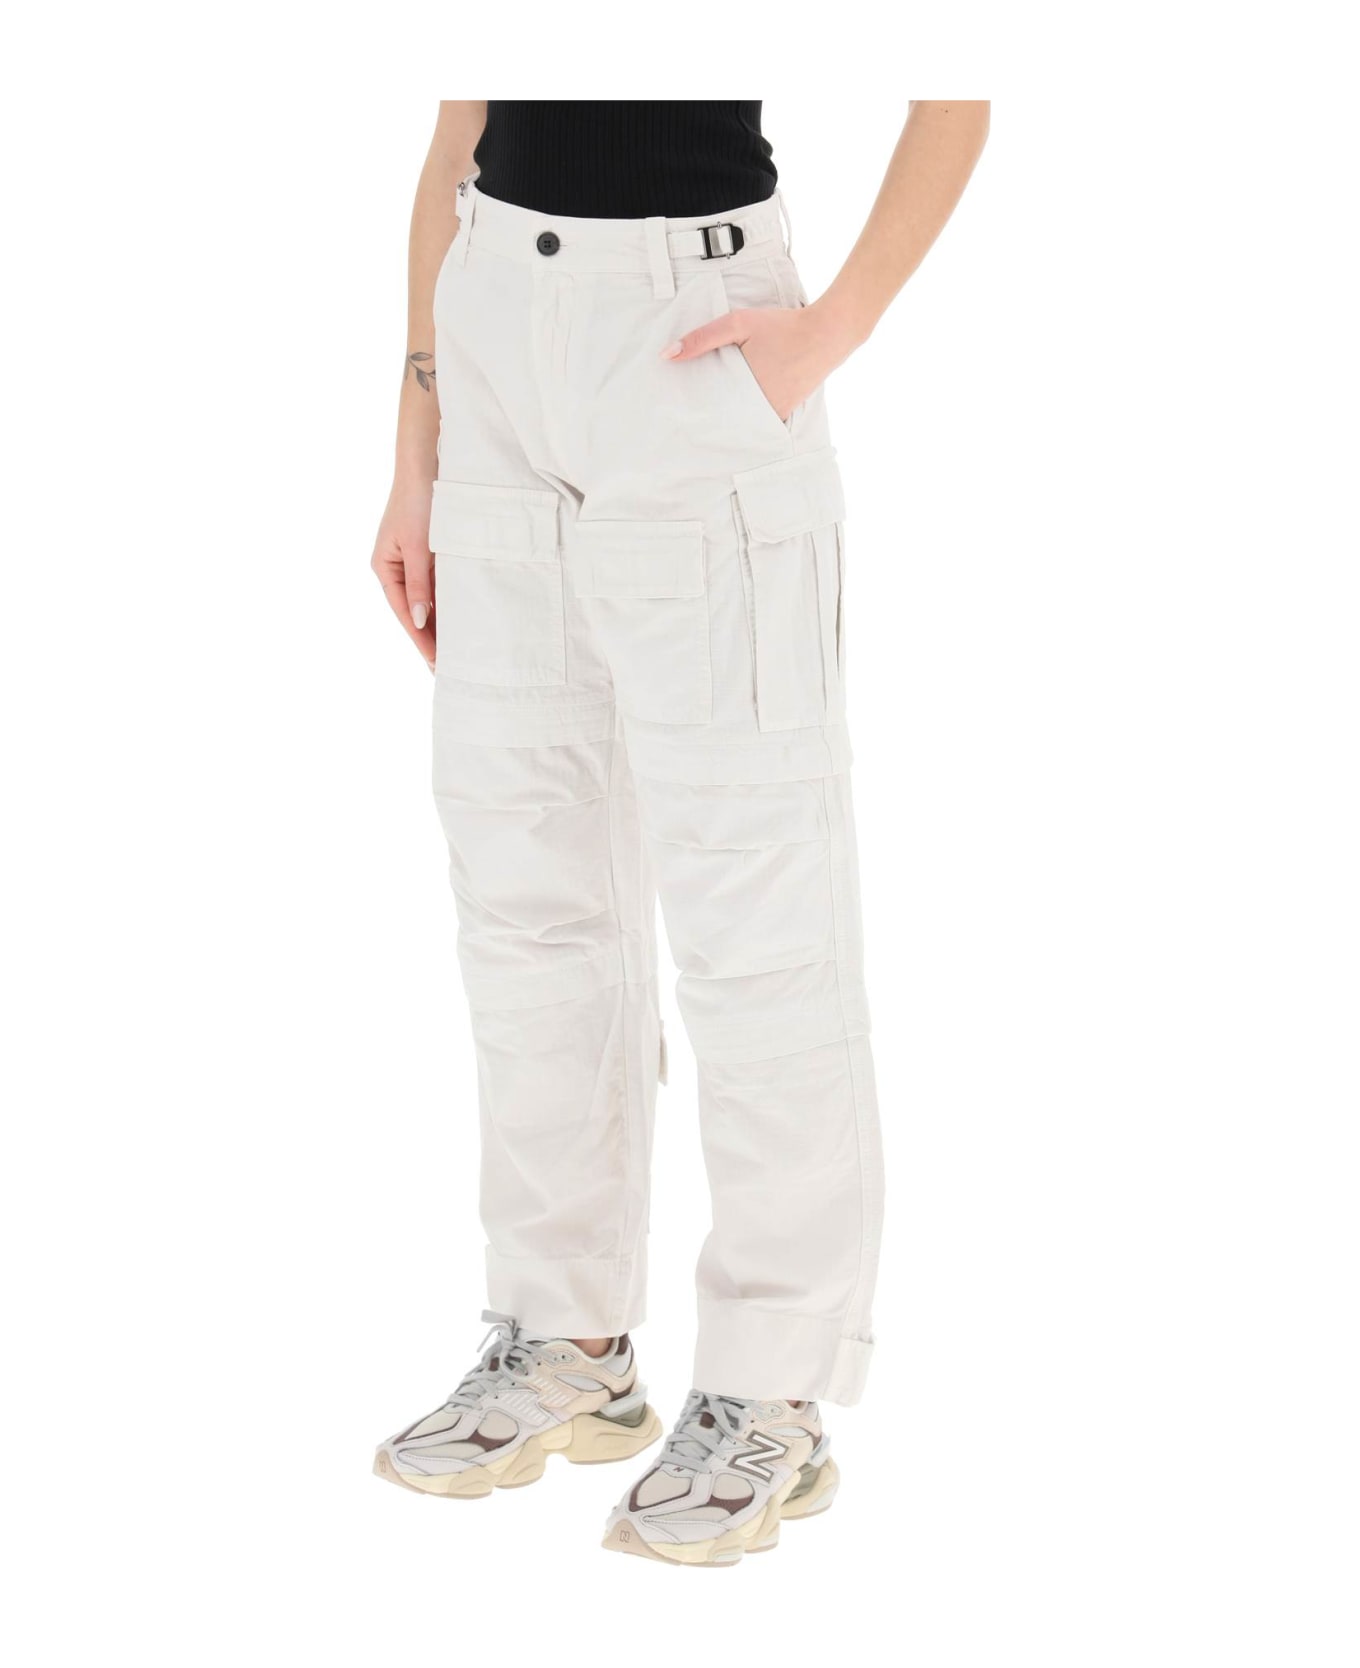 DARKPARK 'julia' Ripstop Cotton Cargo Pants - WHITE ボトムス